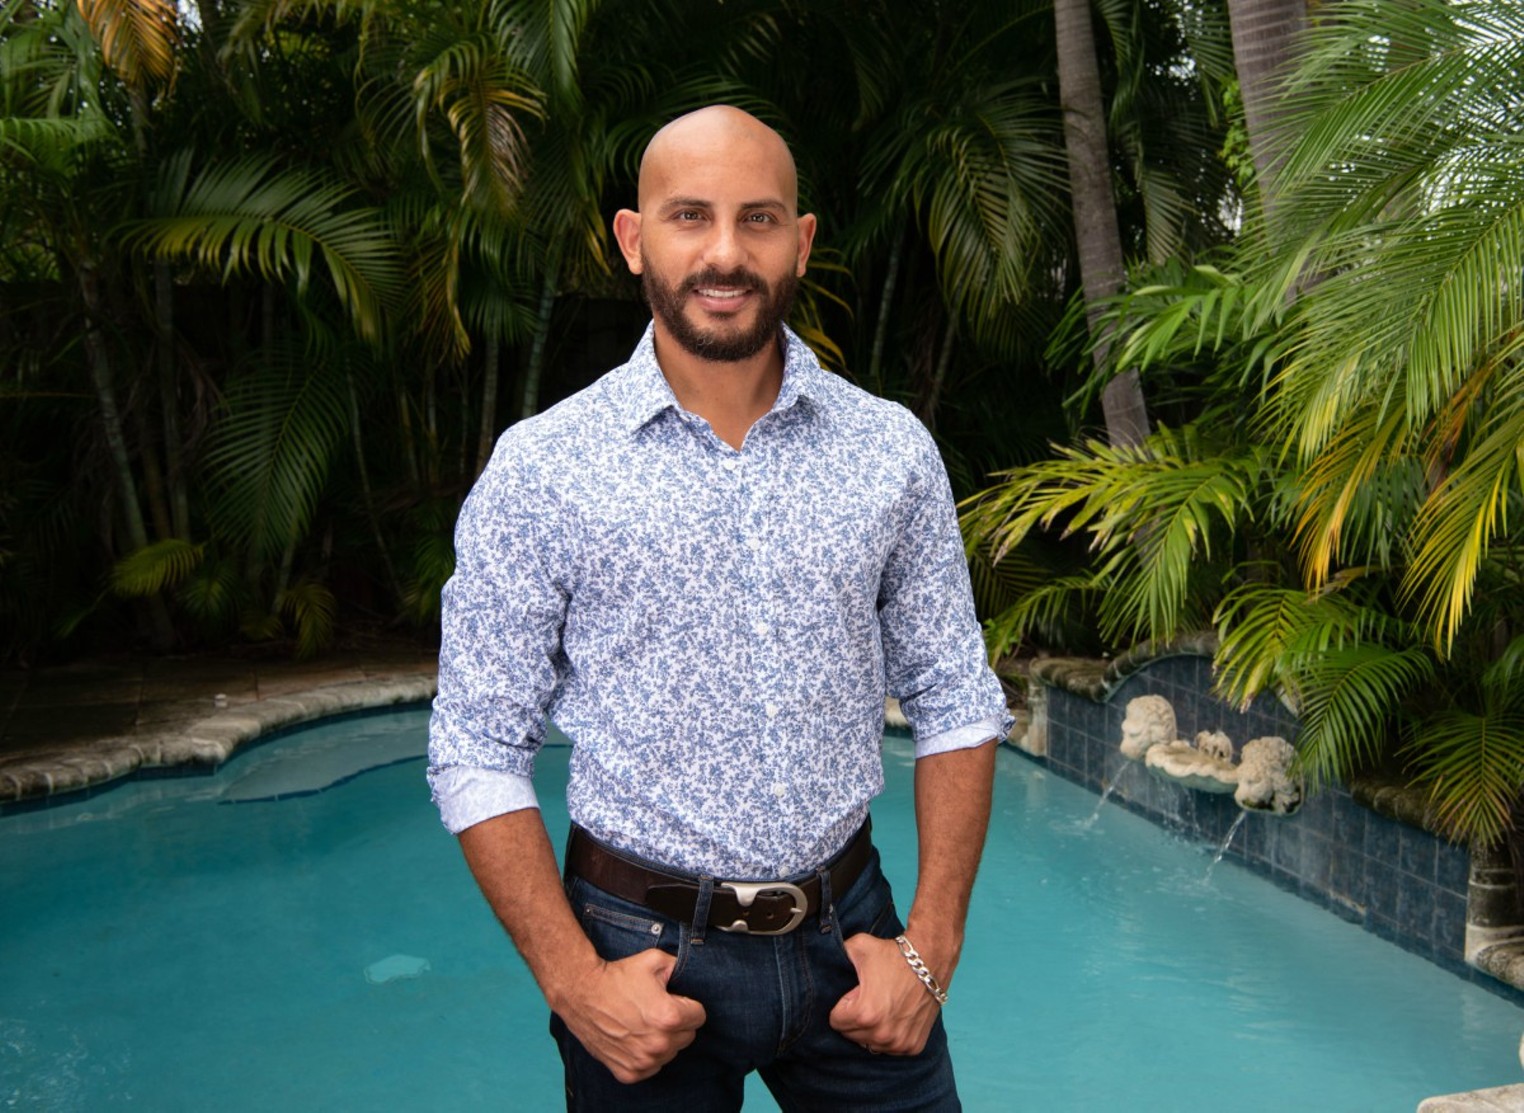 Public Agent Pron Sex Anwal - Porn Star Juan Melecio Runs for Wilton Manors City Commission | Miami New  Times